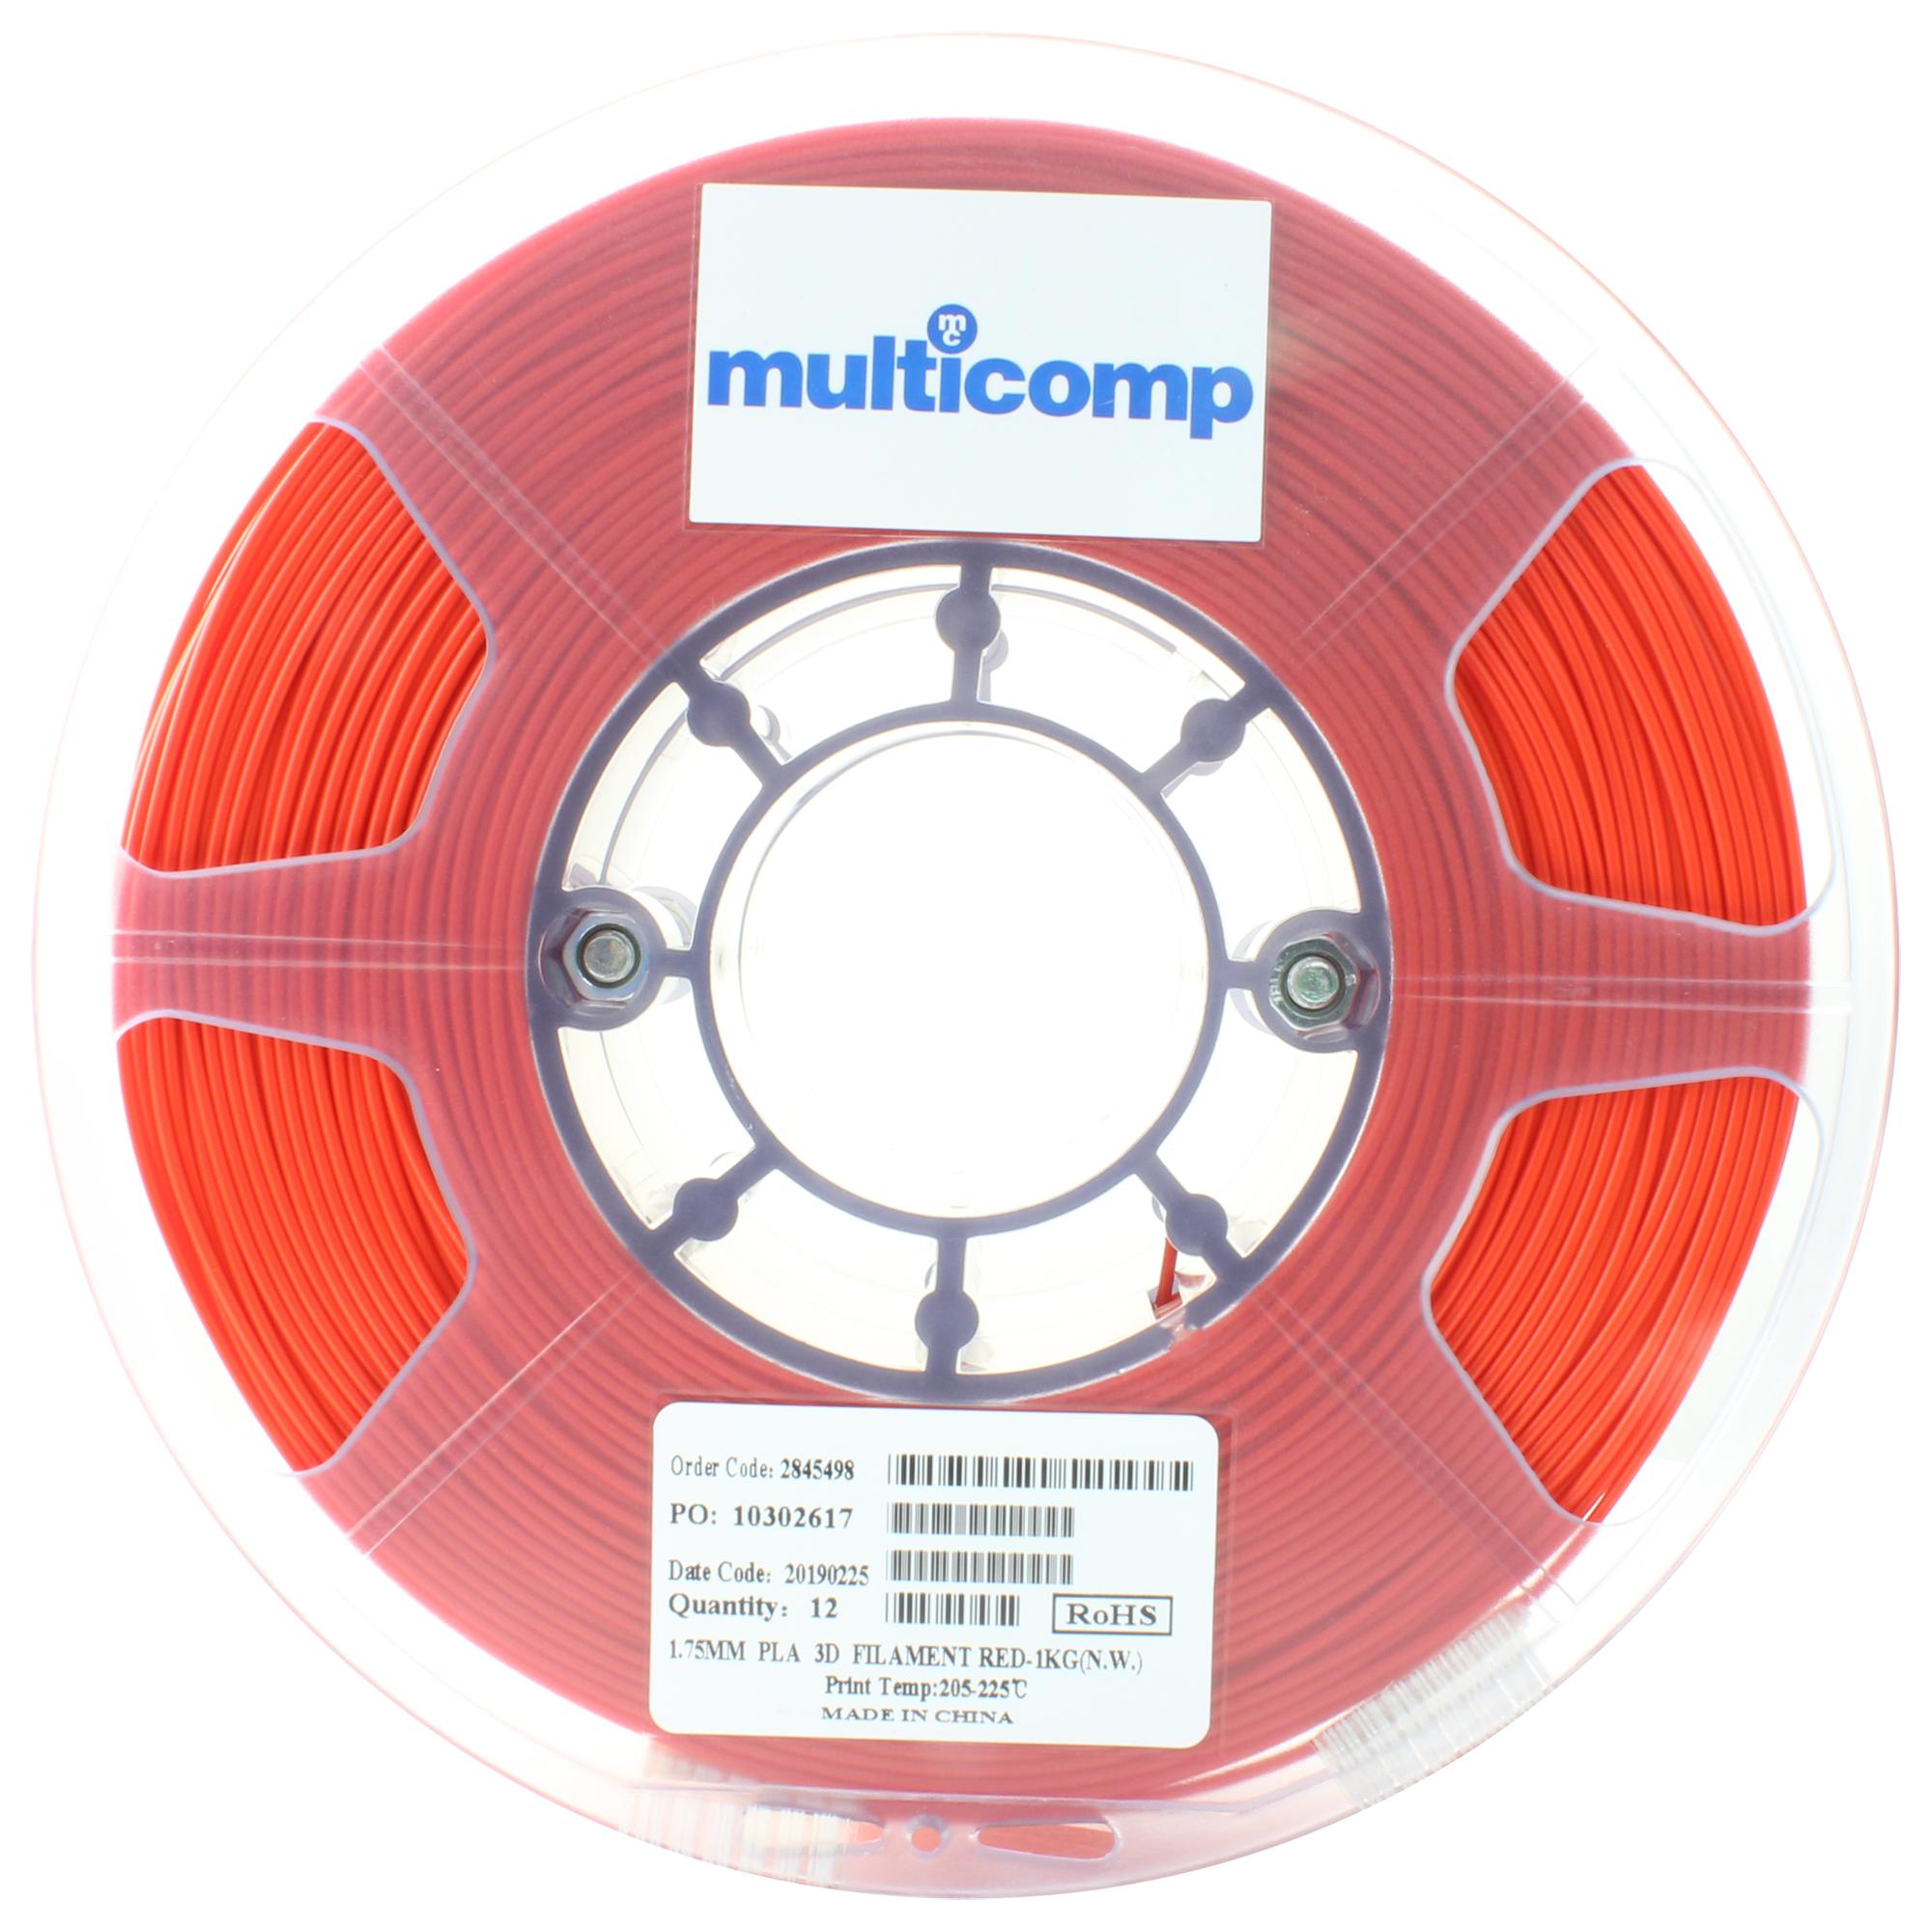 MC002551 3D PRINTER FILAMENT, PLA, 1.75MM, RED MULTICOMP